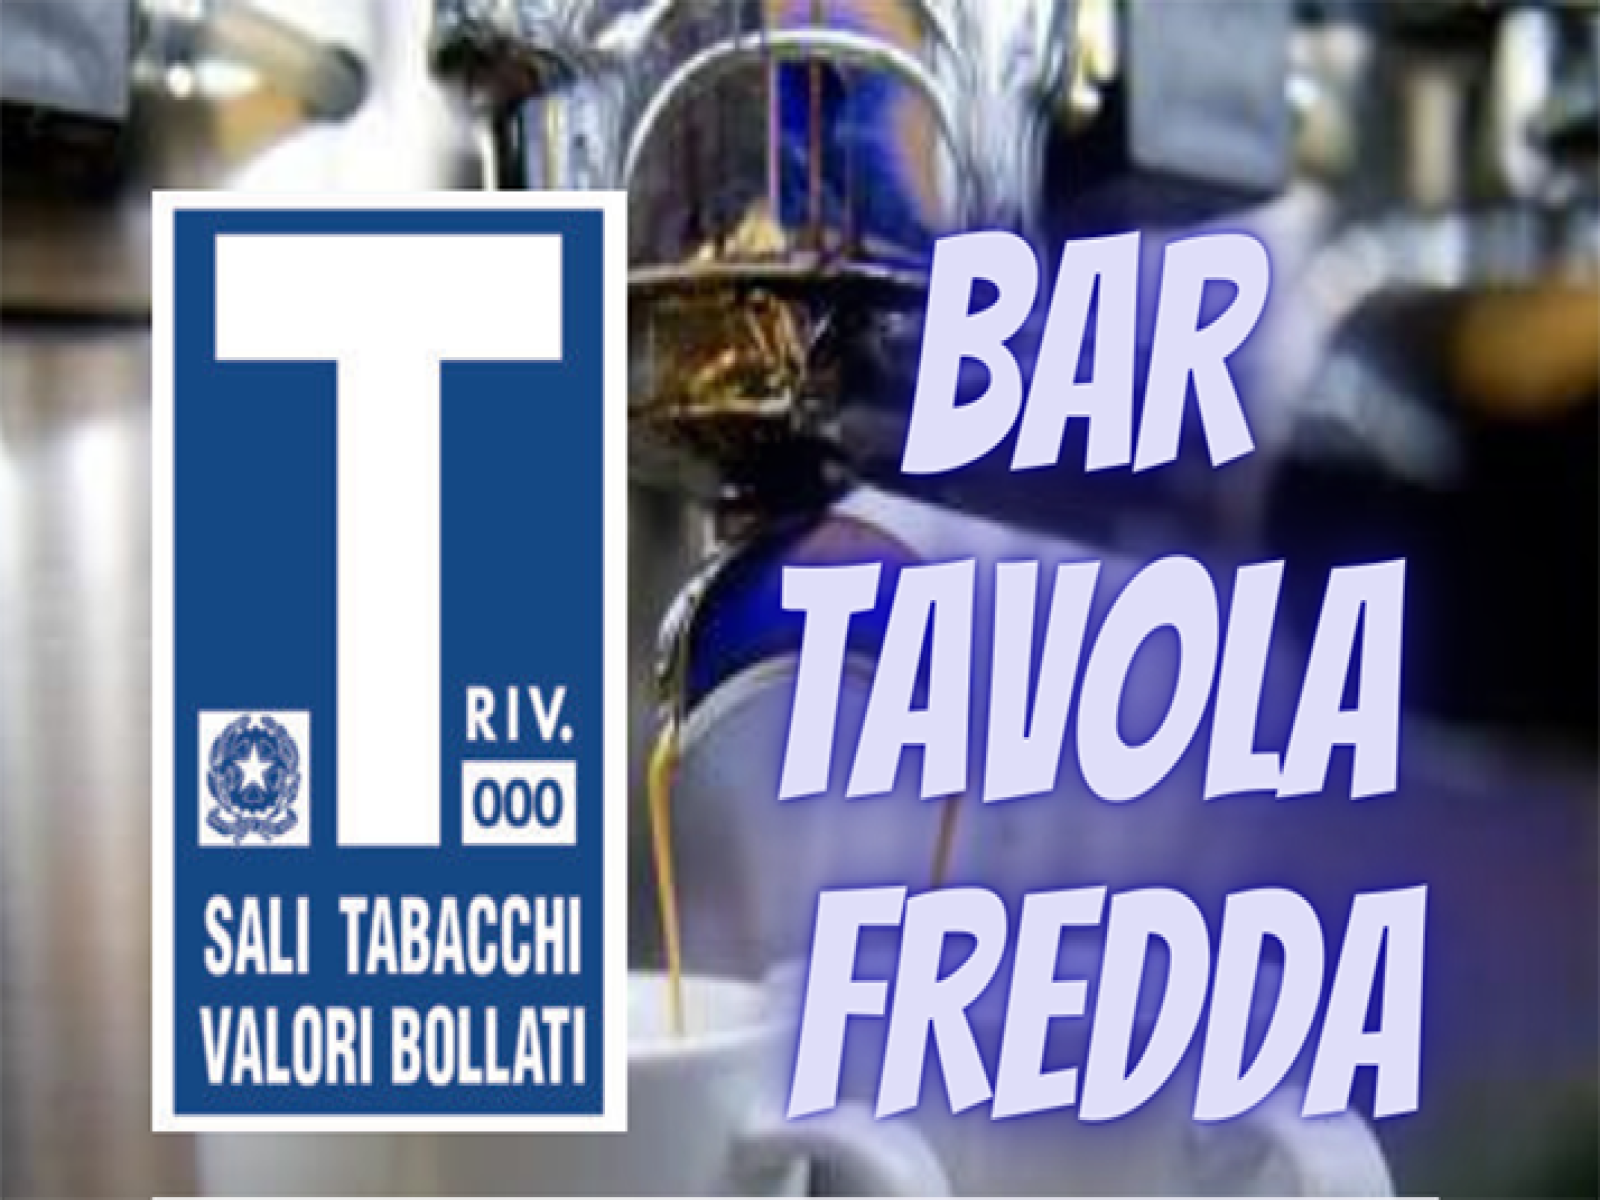 Bar Tabacchi in centro - rif. Bot101/22